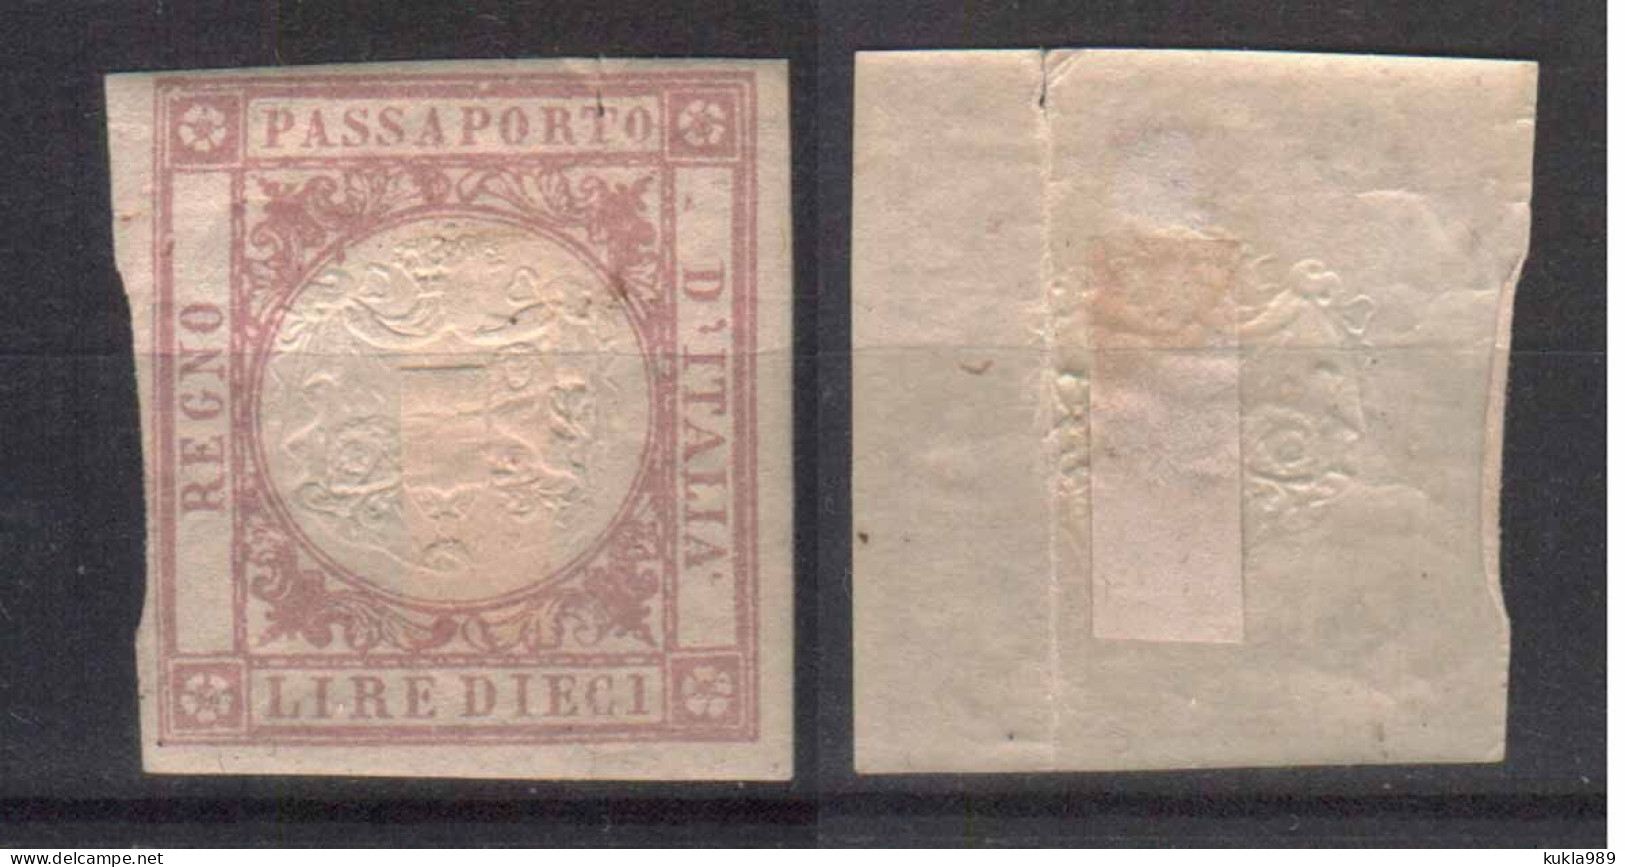 KINGDOM ITALY   FISCAL REVENUE TAX PASSPORT  STAMP  C. 1860s, MH - Fiscaux